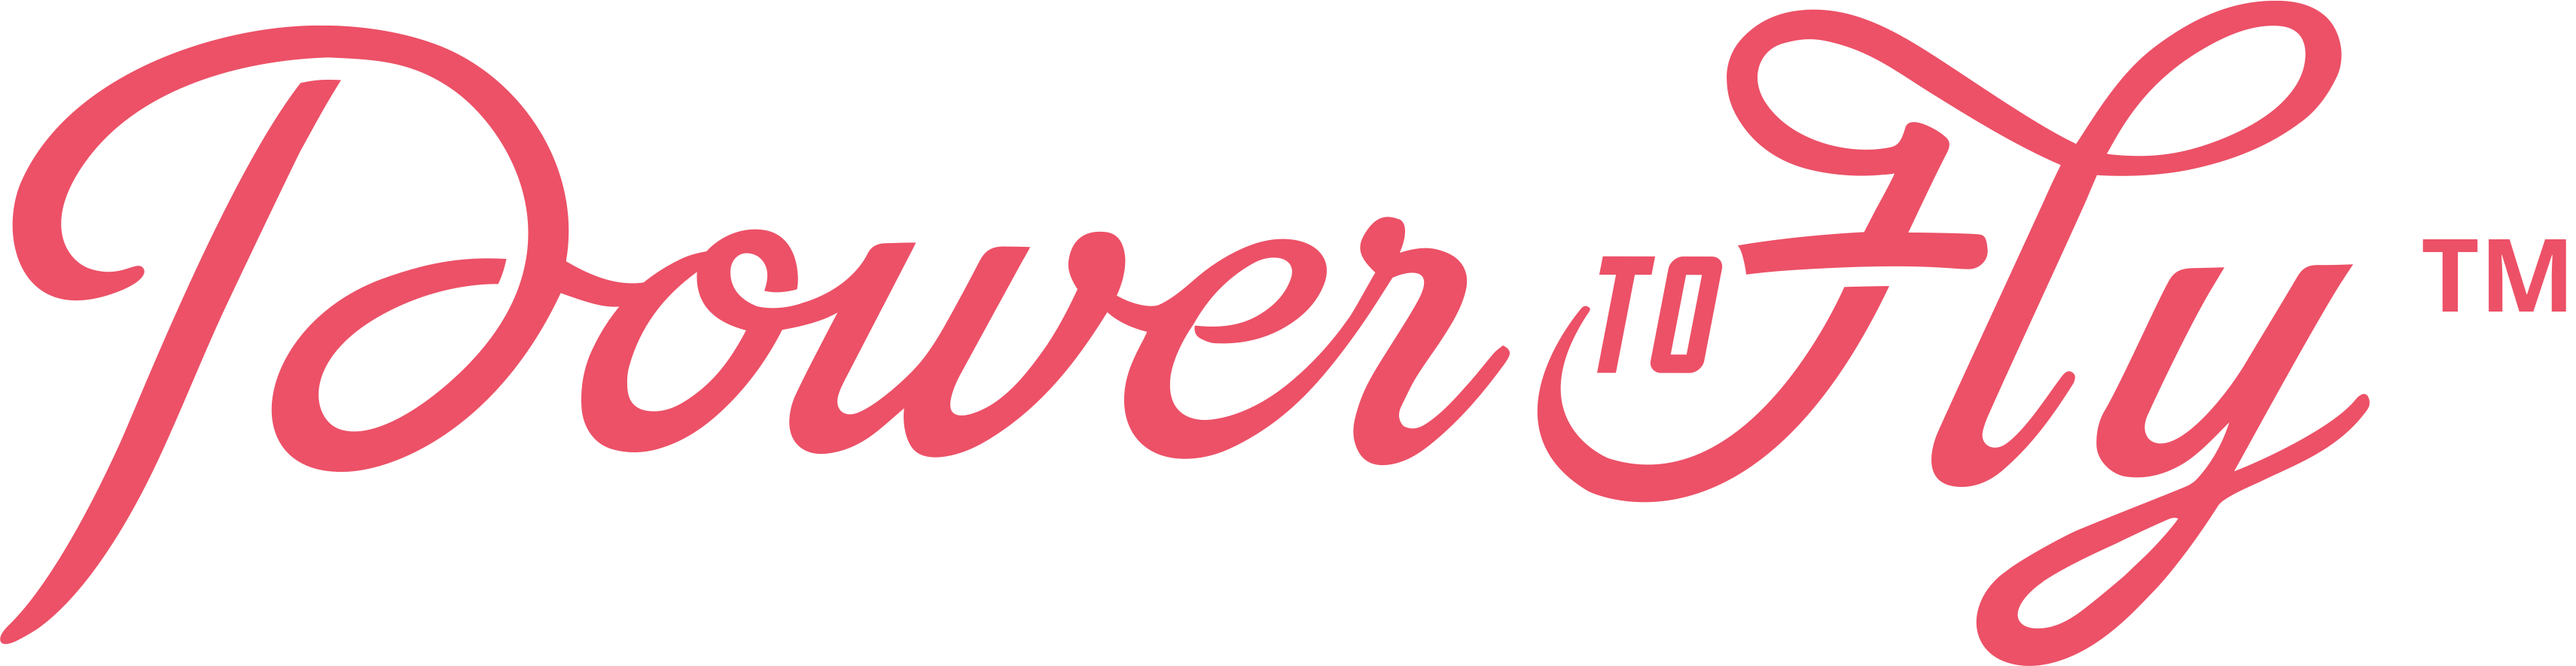 powertofly-pink-logo